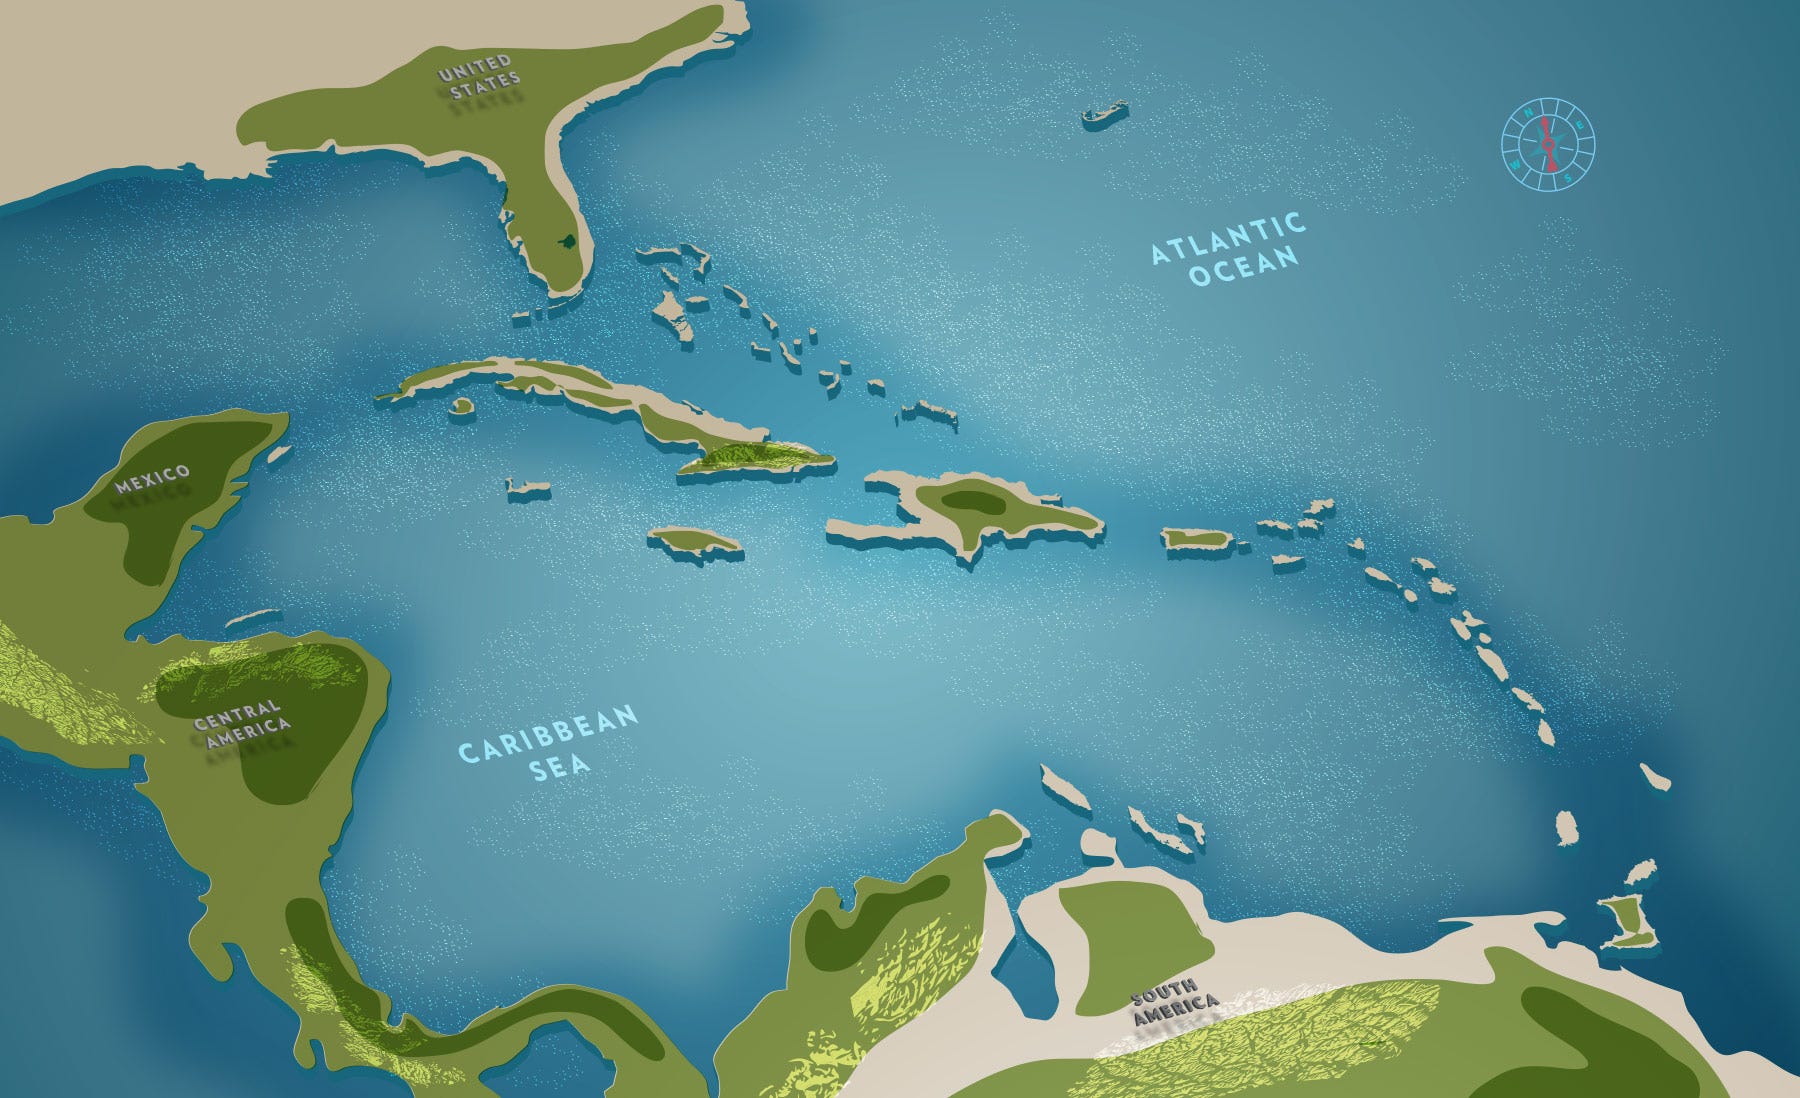 Группа островов в западной части тихого океана. Острова Карибского моря на карте. Карибское море Атлантический океан. Карибский бассейн на карте.